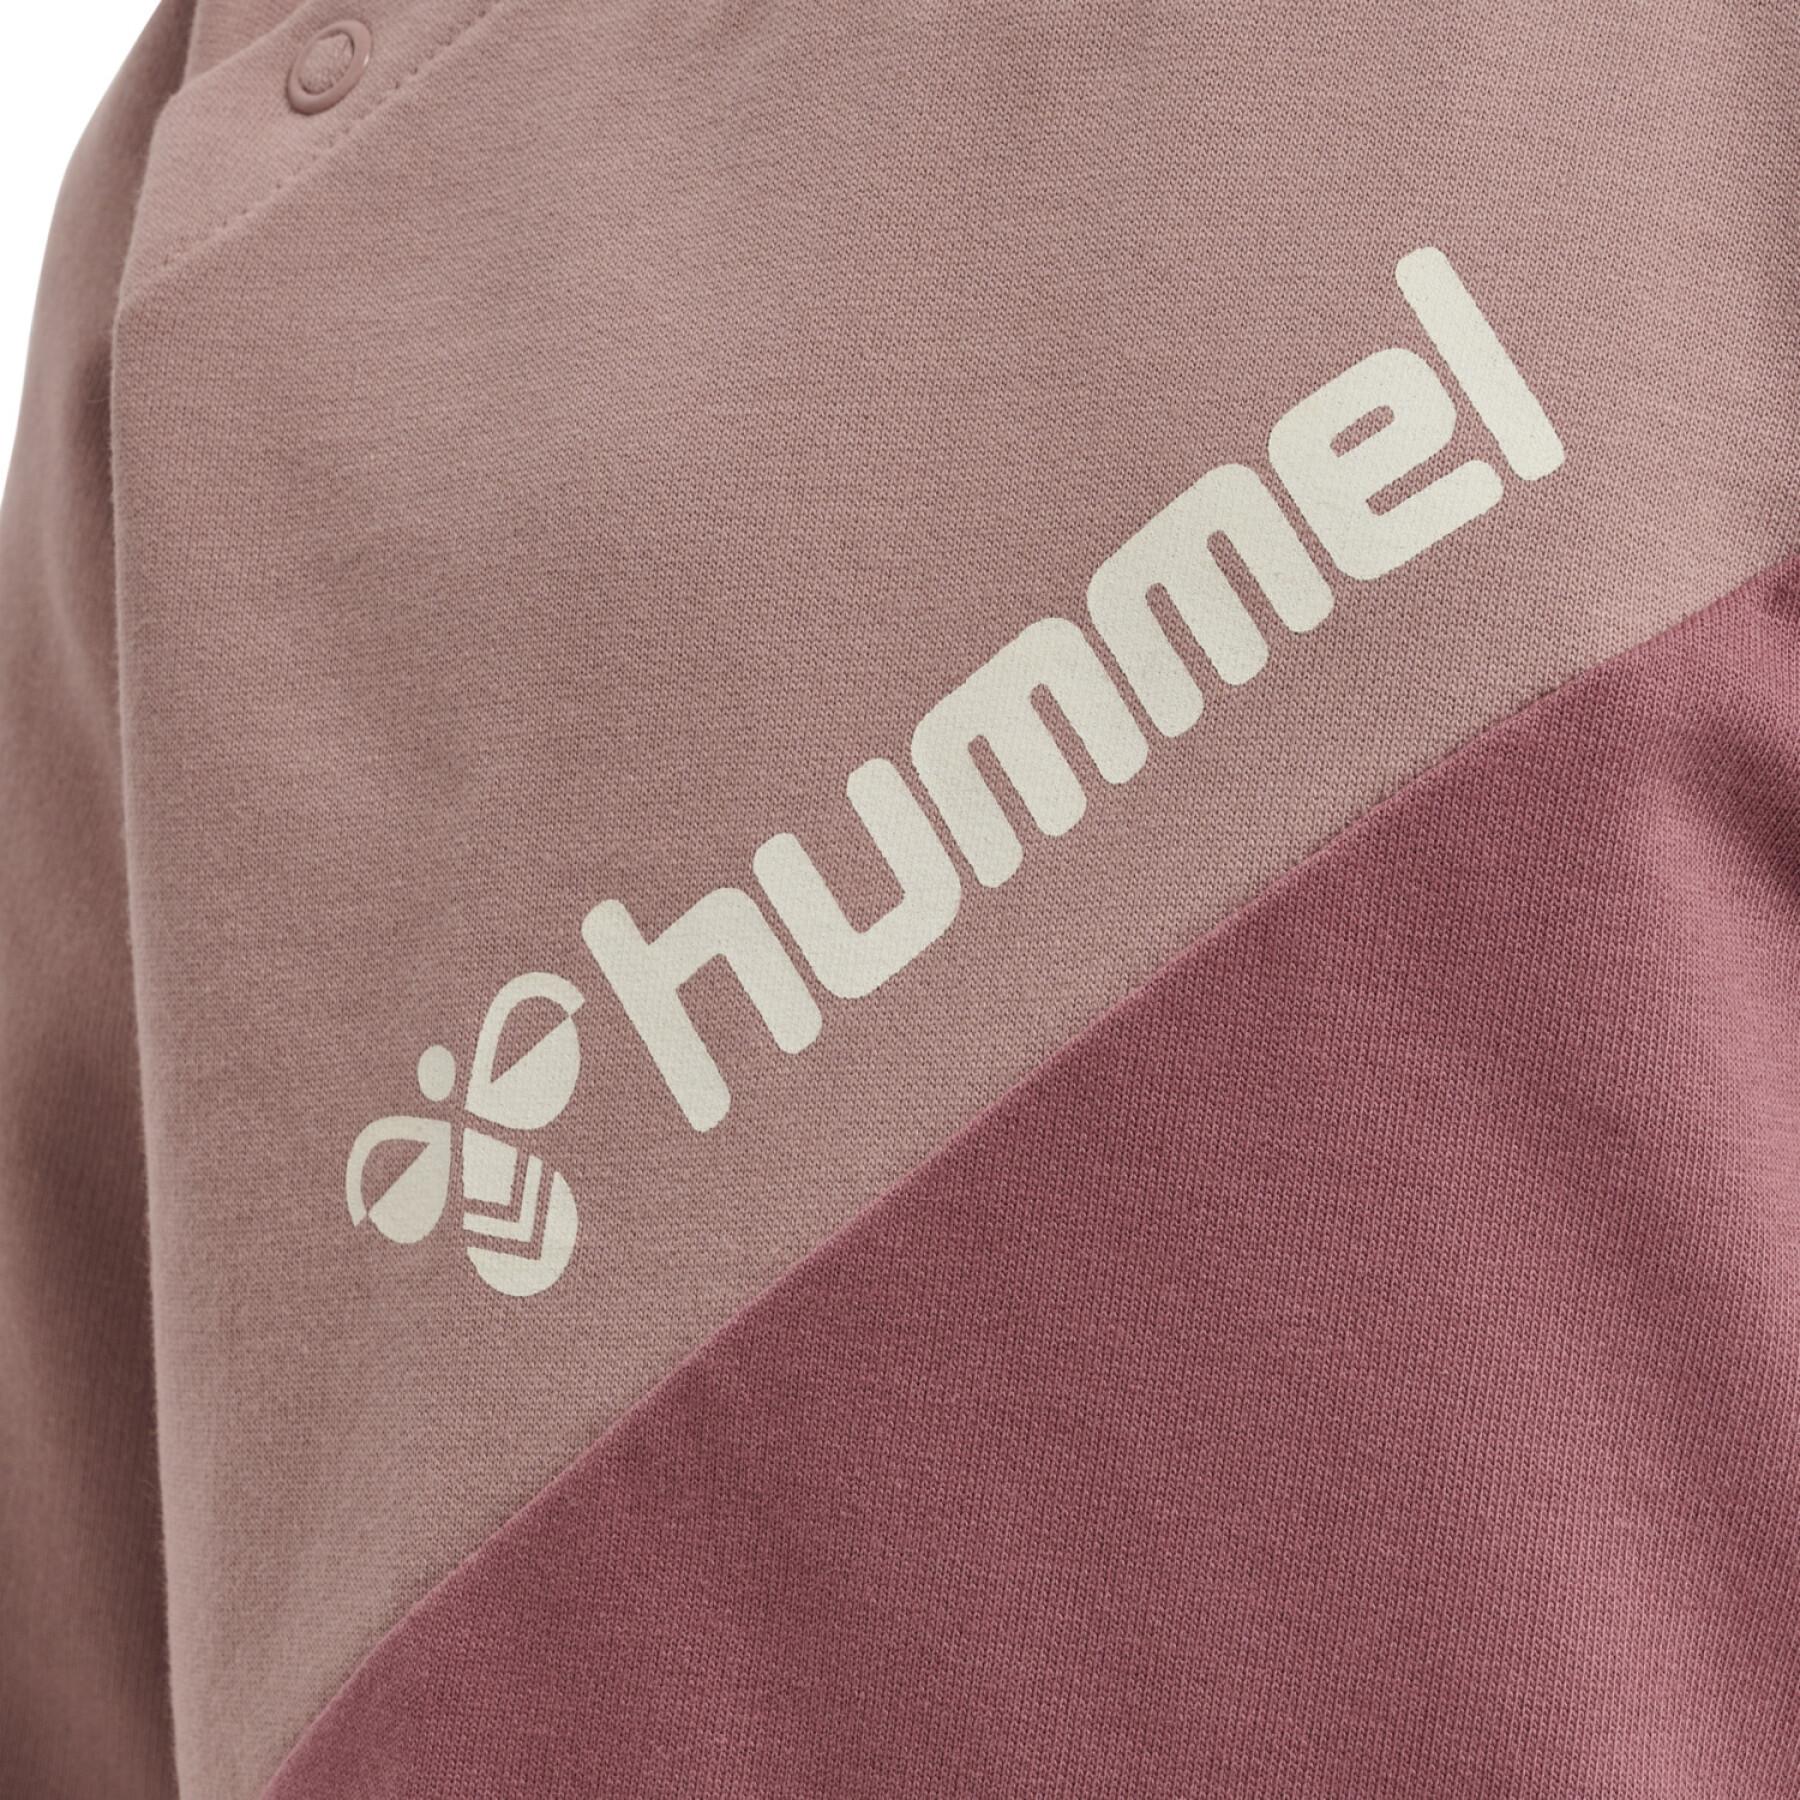 Sweatshirt child Hummel Sportive